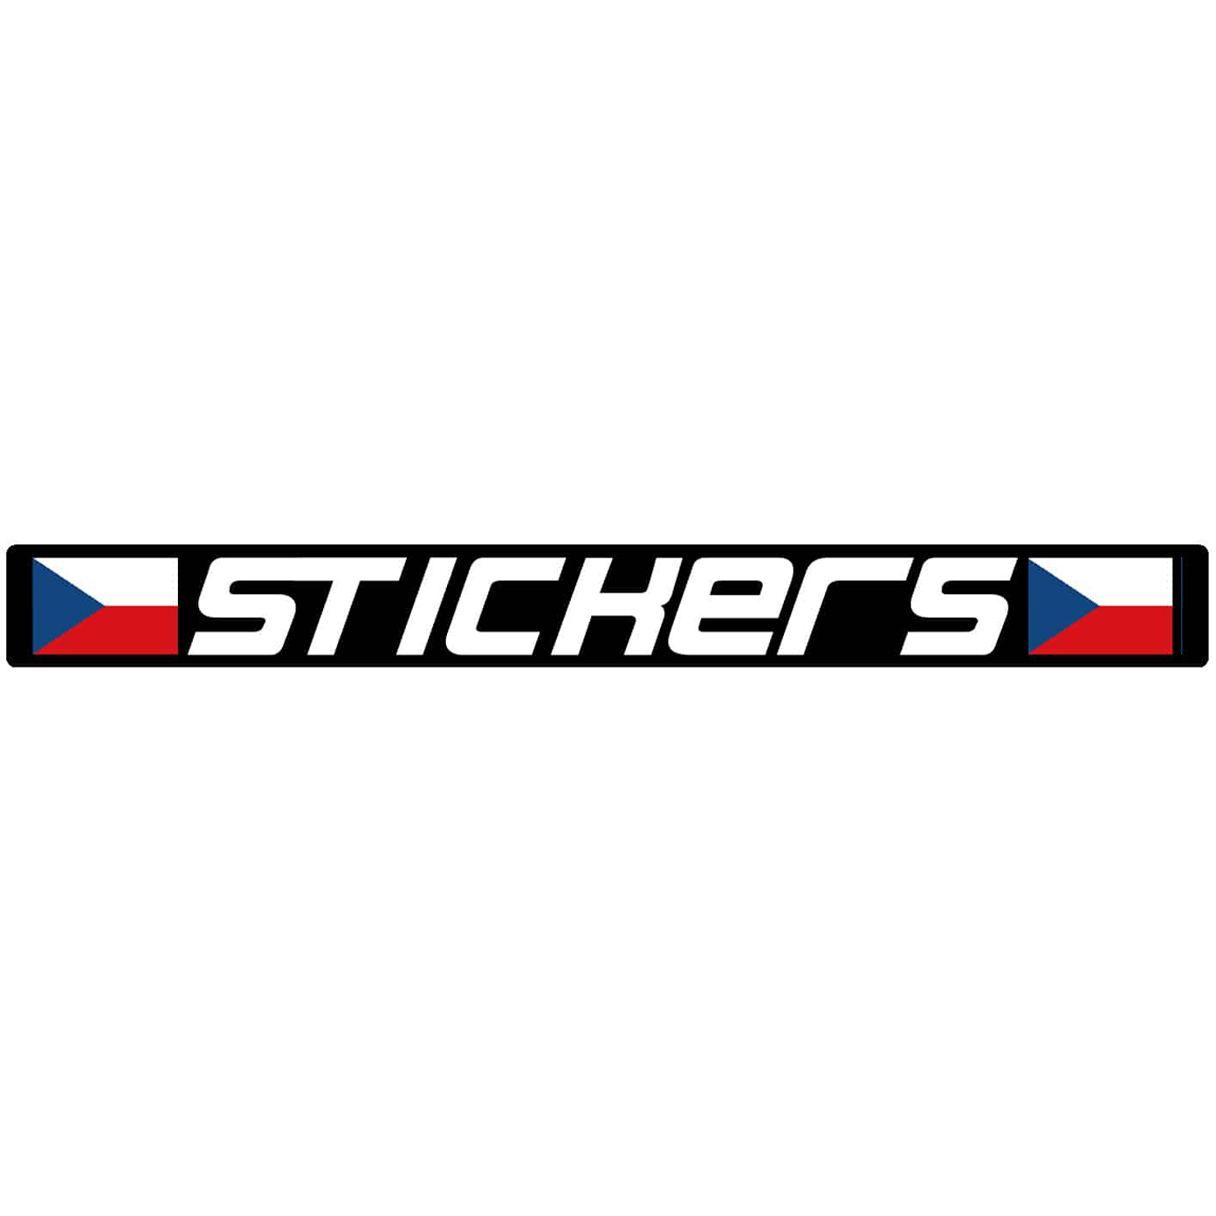 Ice hockey stickers - type S2 (2× logos + text)